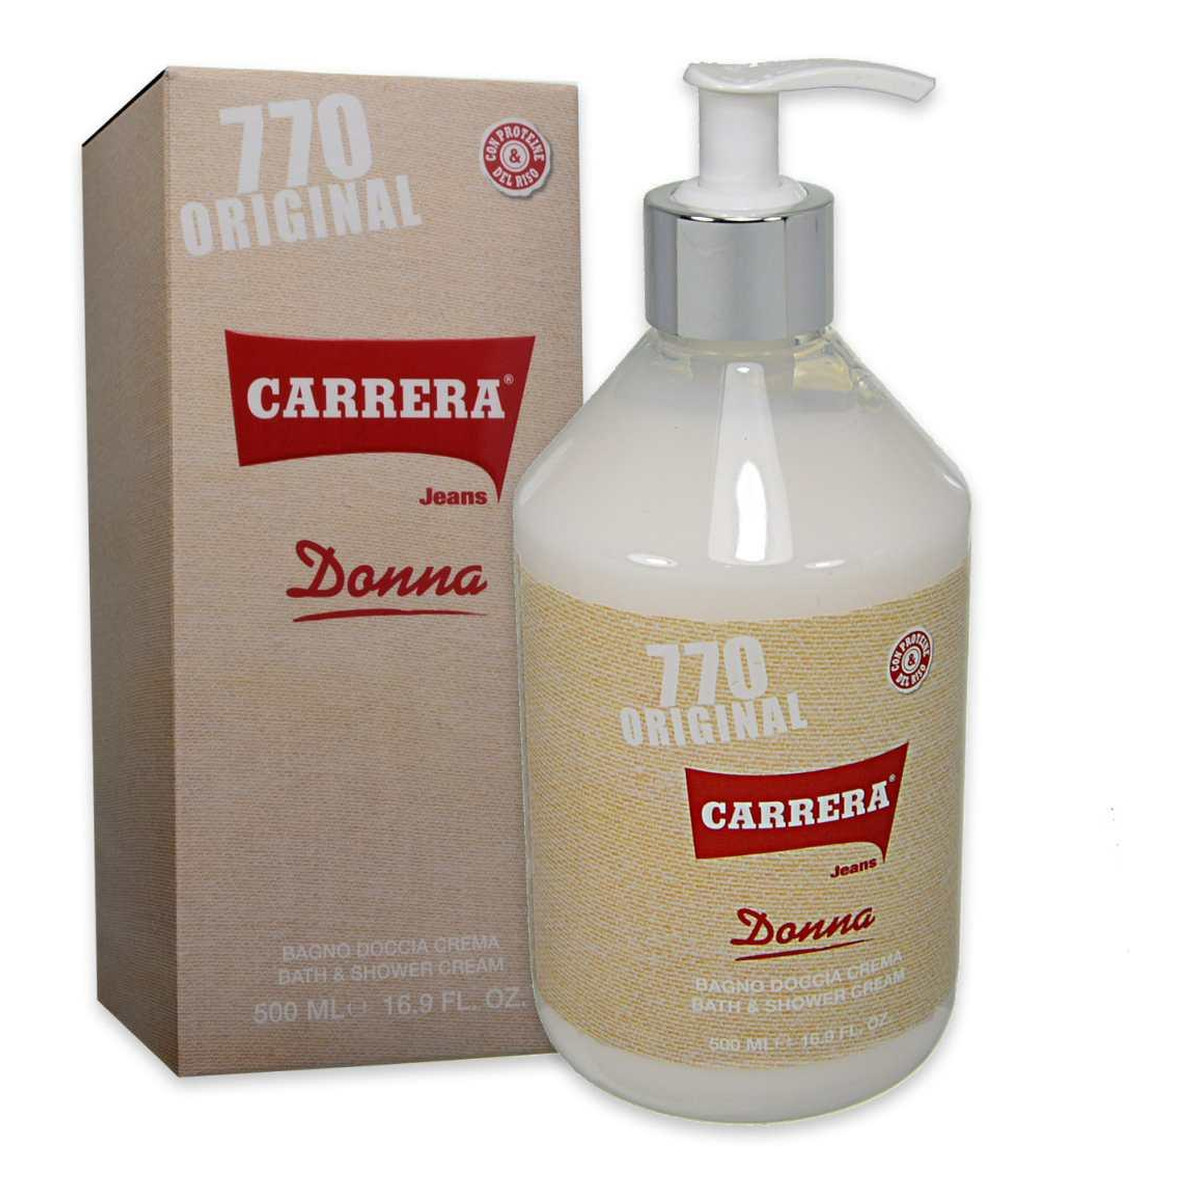 Carrera 700 Original Donna Kremowy żel pod prysznic 500ml